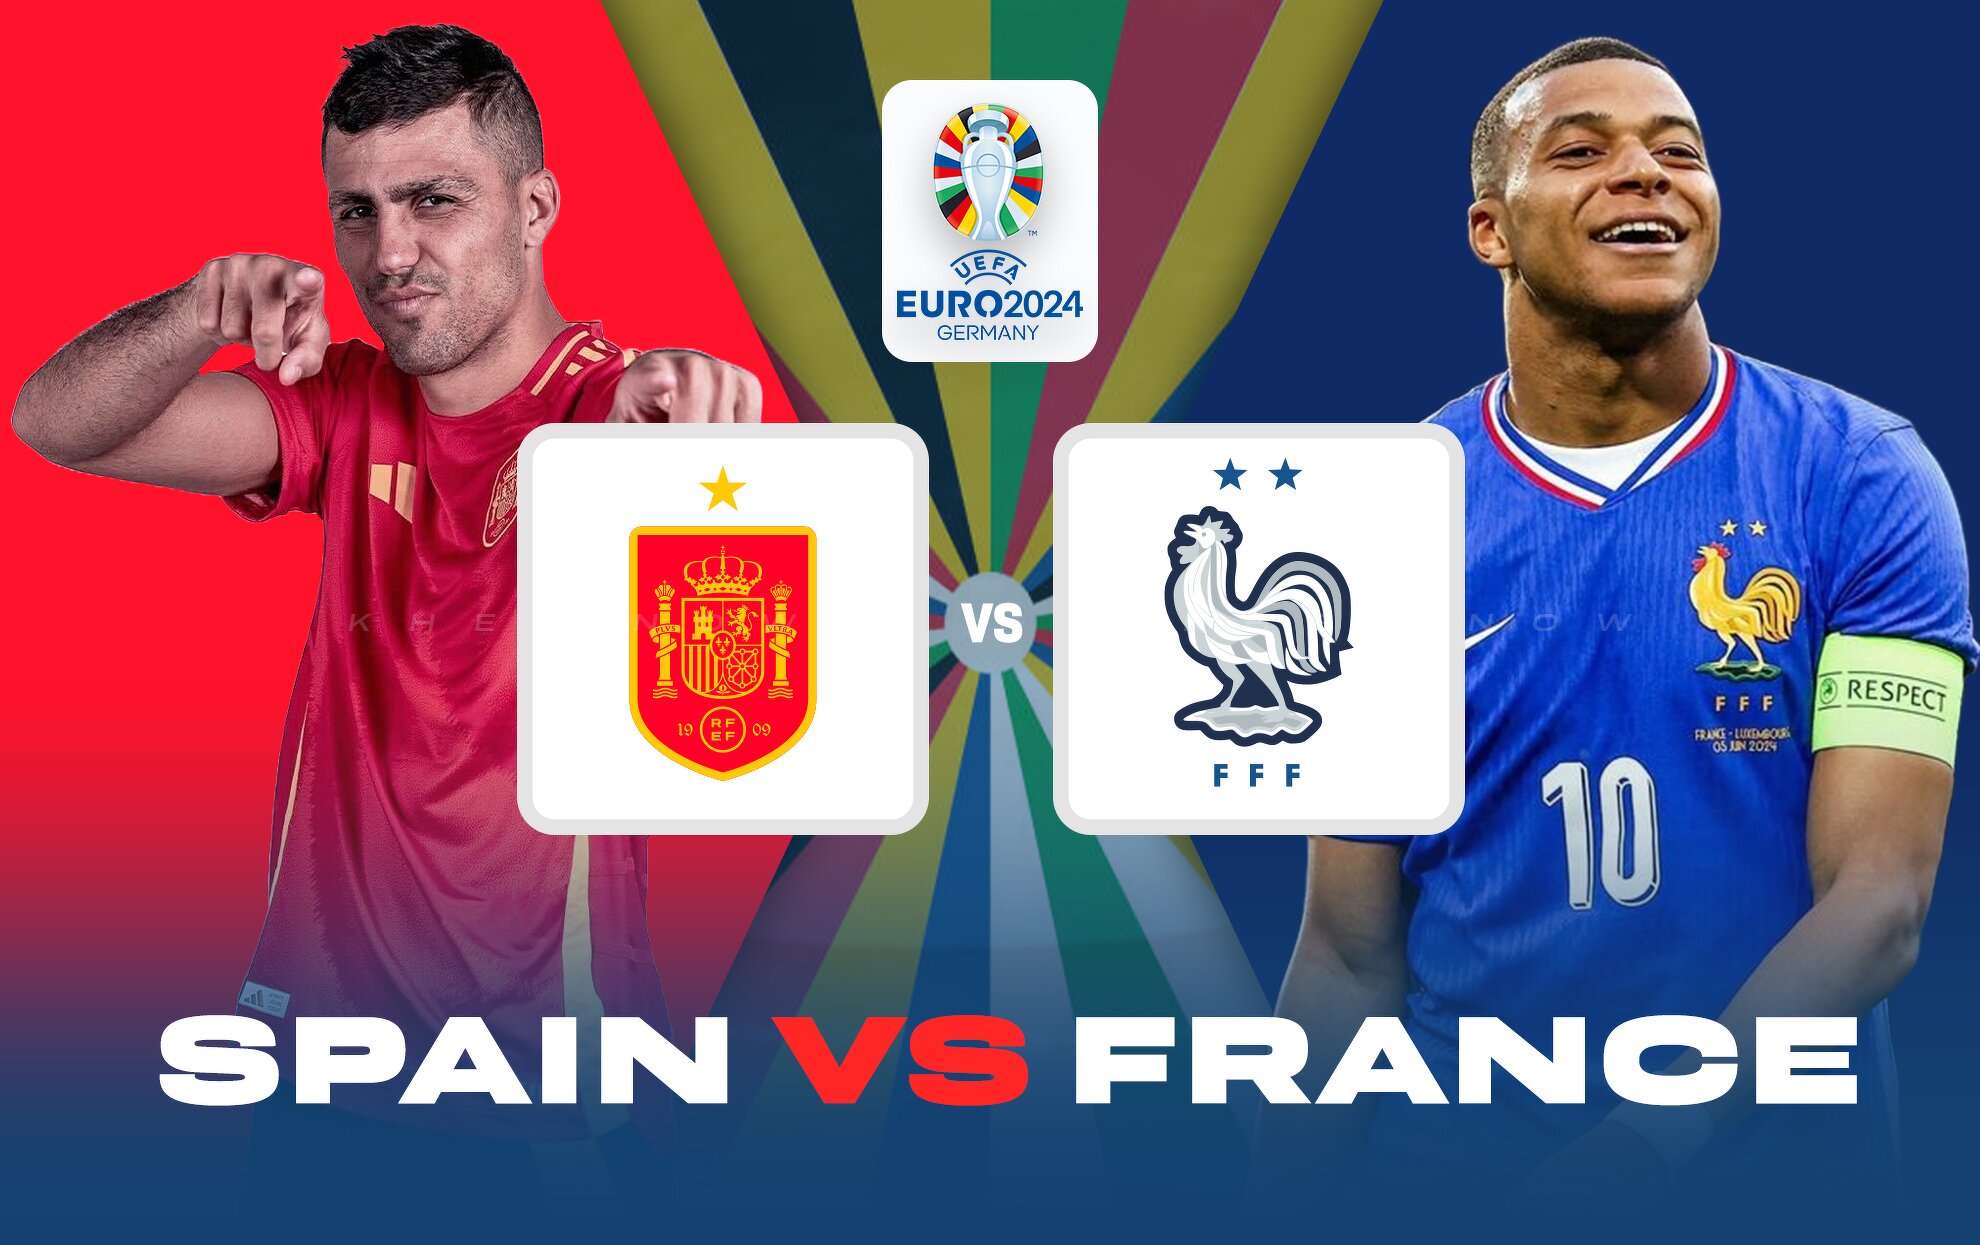 Spain vs France Live score and updates | UEFA Euro 2024 semi-final